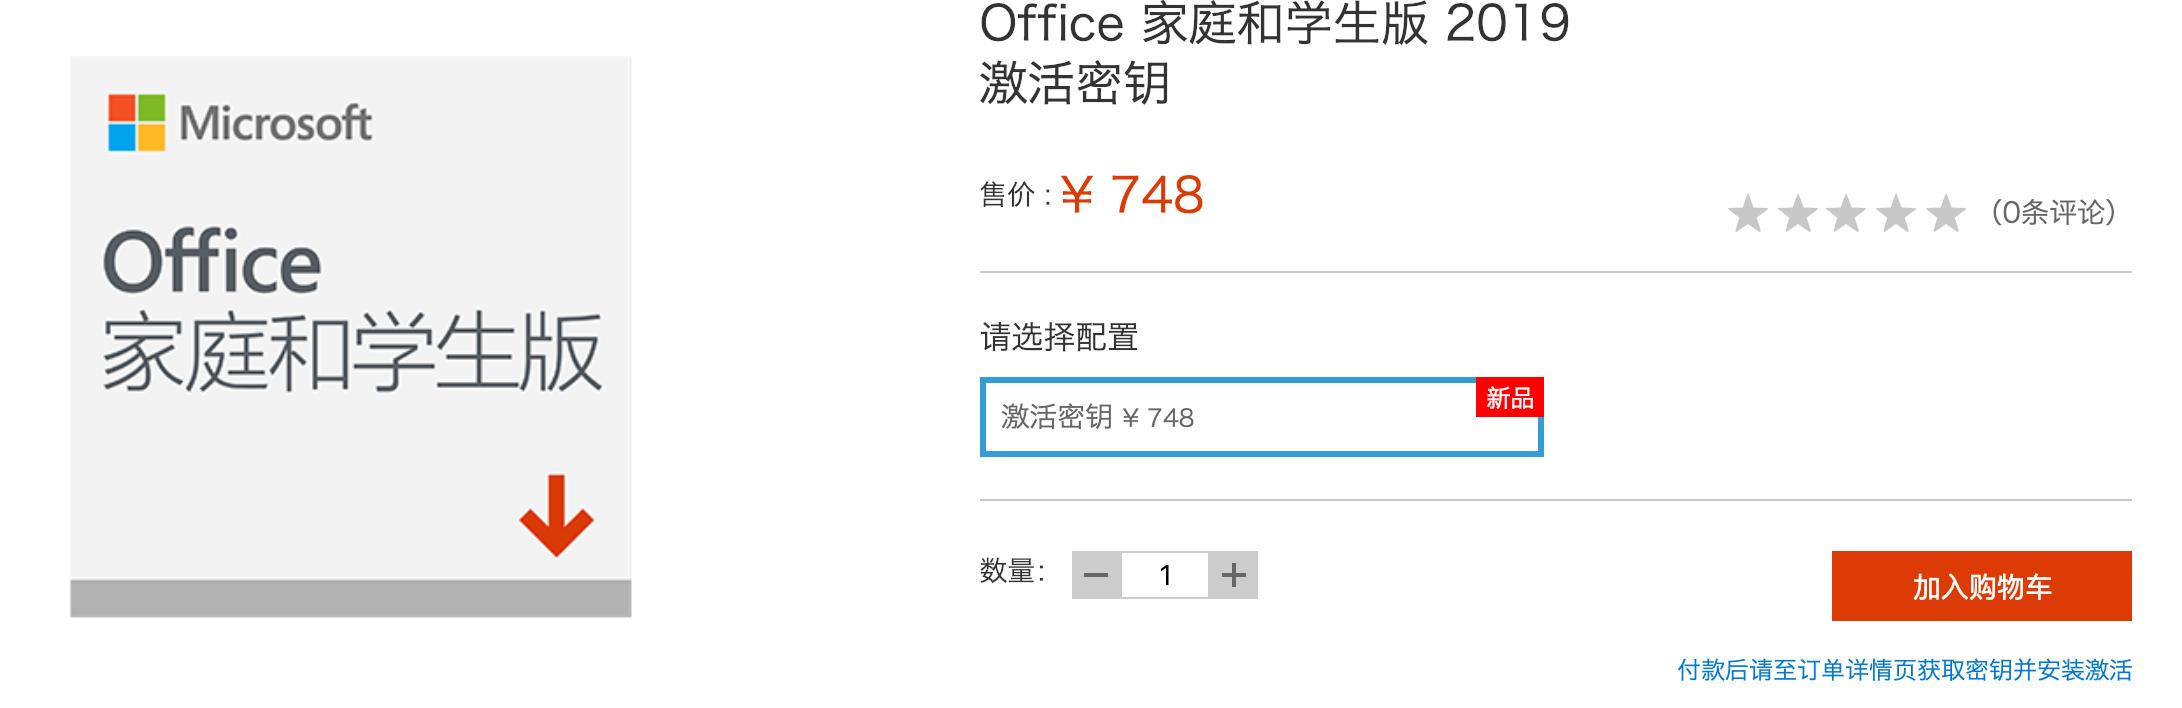 Office 365登陆Mac Store：可惜还是下载不了